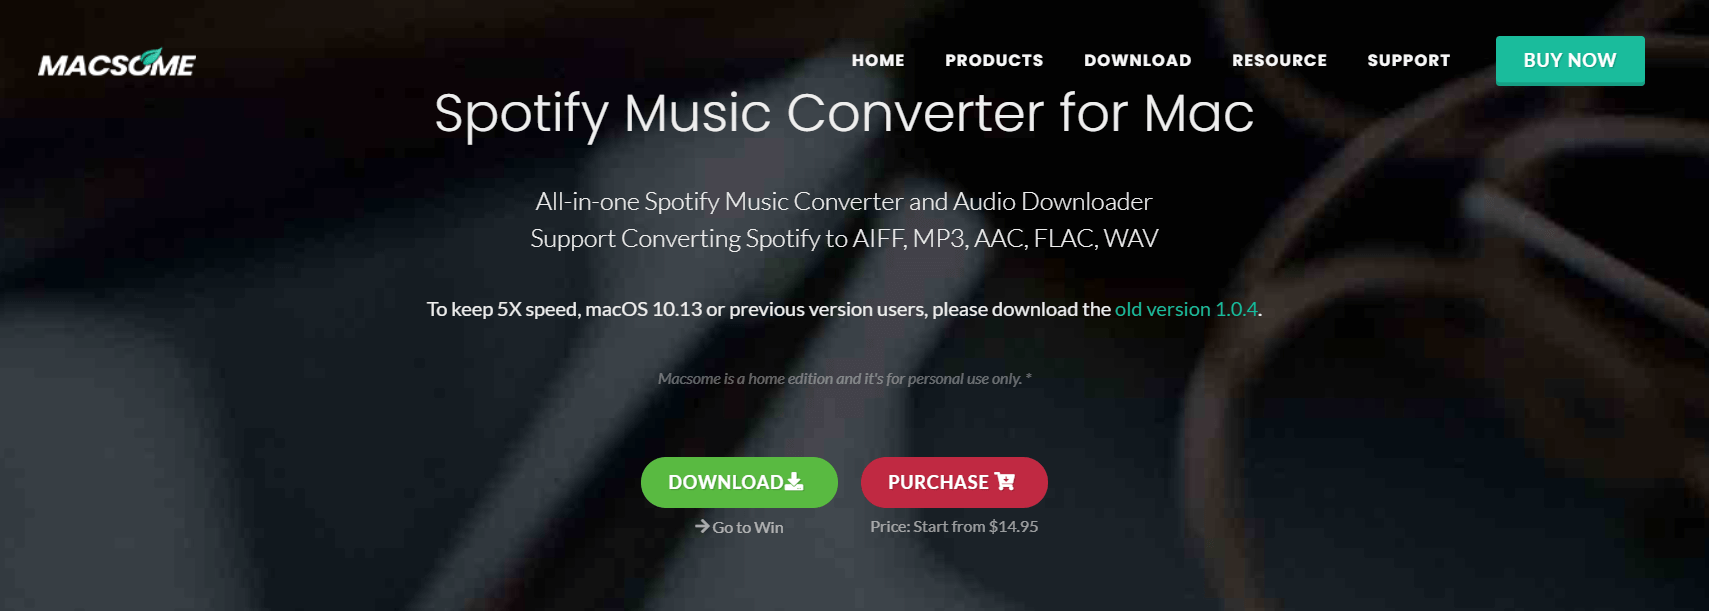 Spotify Downloader auf dem Mac Macsome Spotify Spotify Musikkonverter